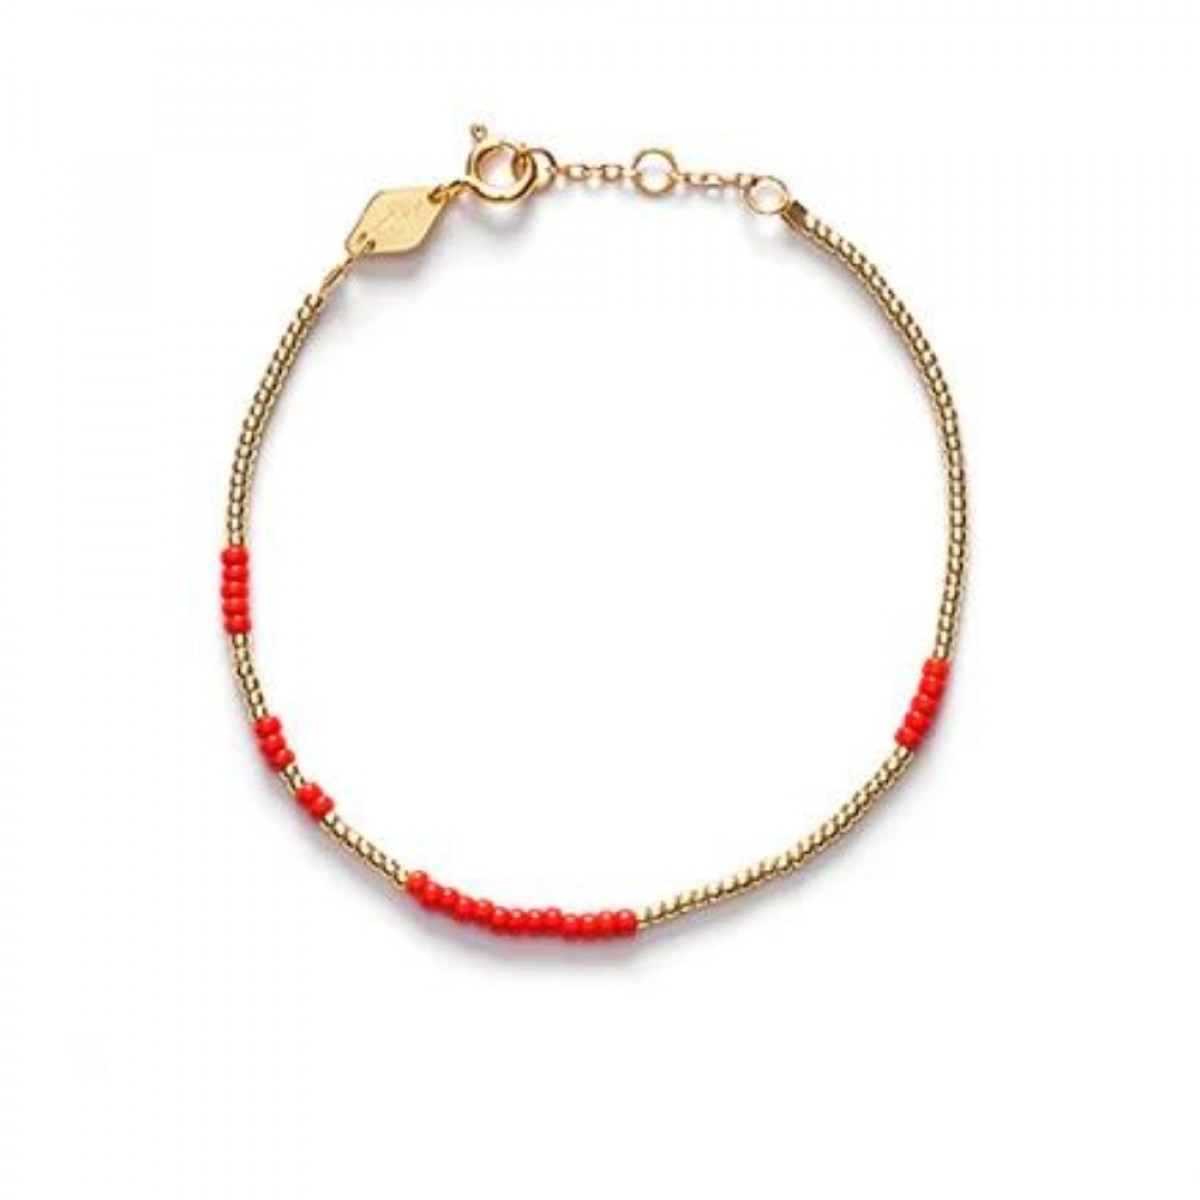 asym bracelet - red - front